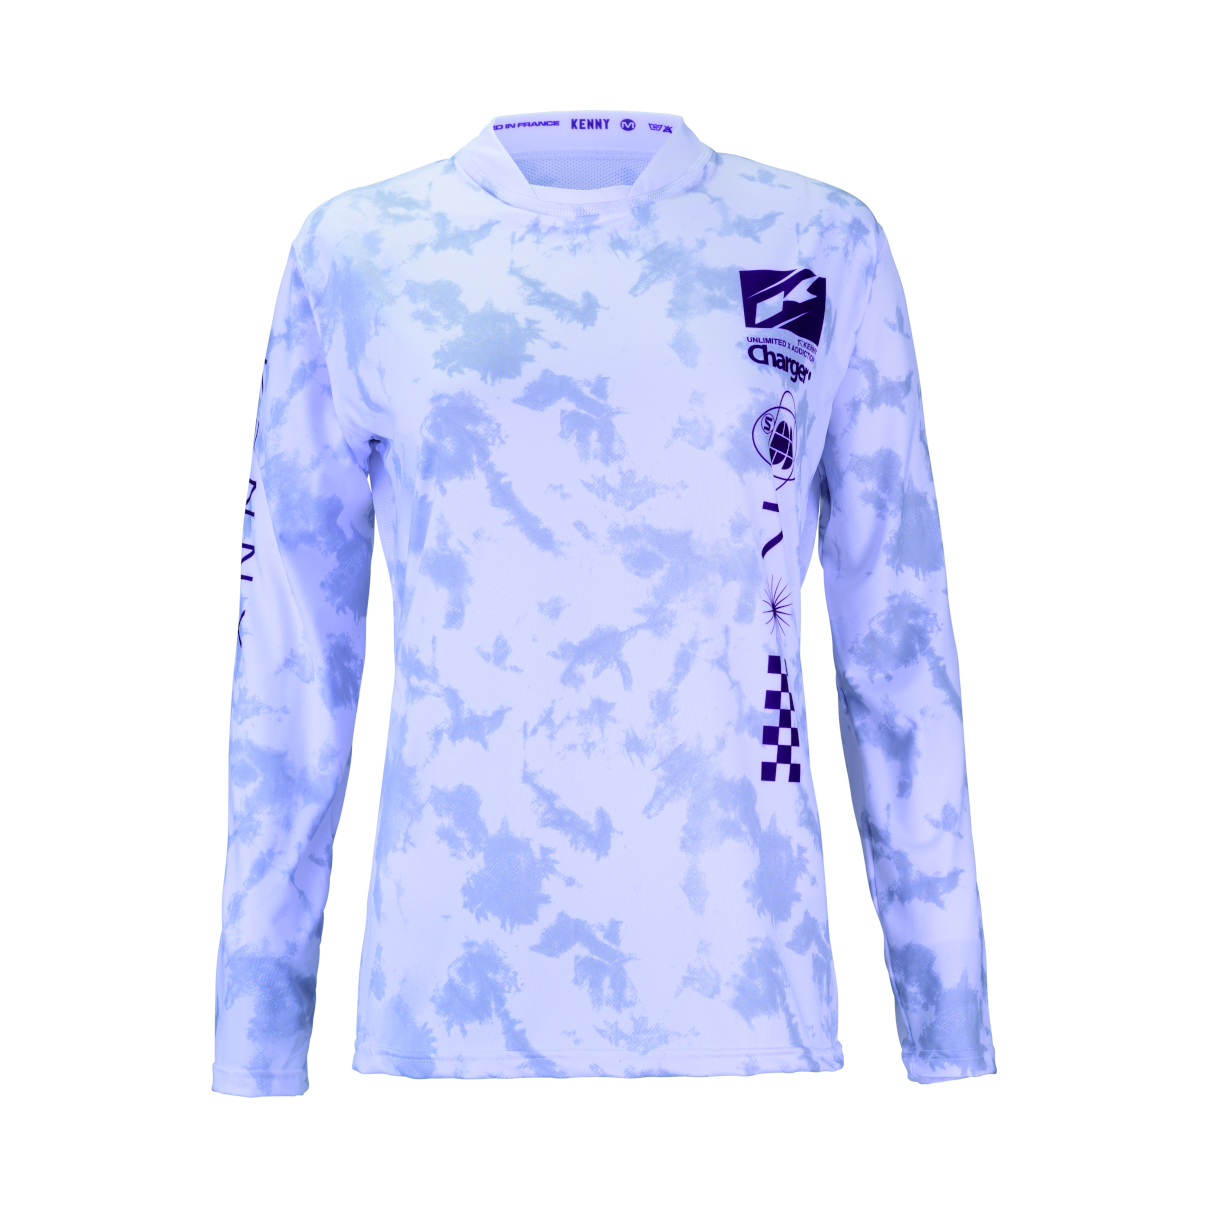 Kenny Racing Charger Women's Long Sleeve Jersey - Women's M - Dye White - Image 2